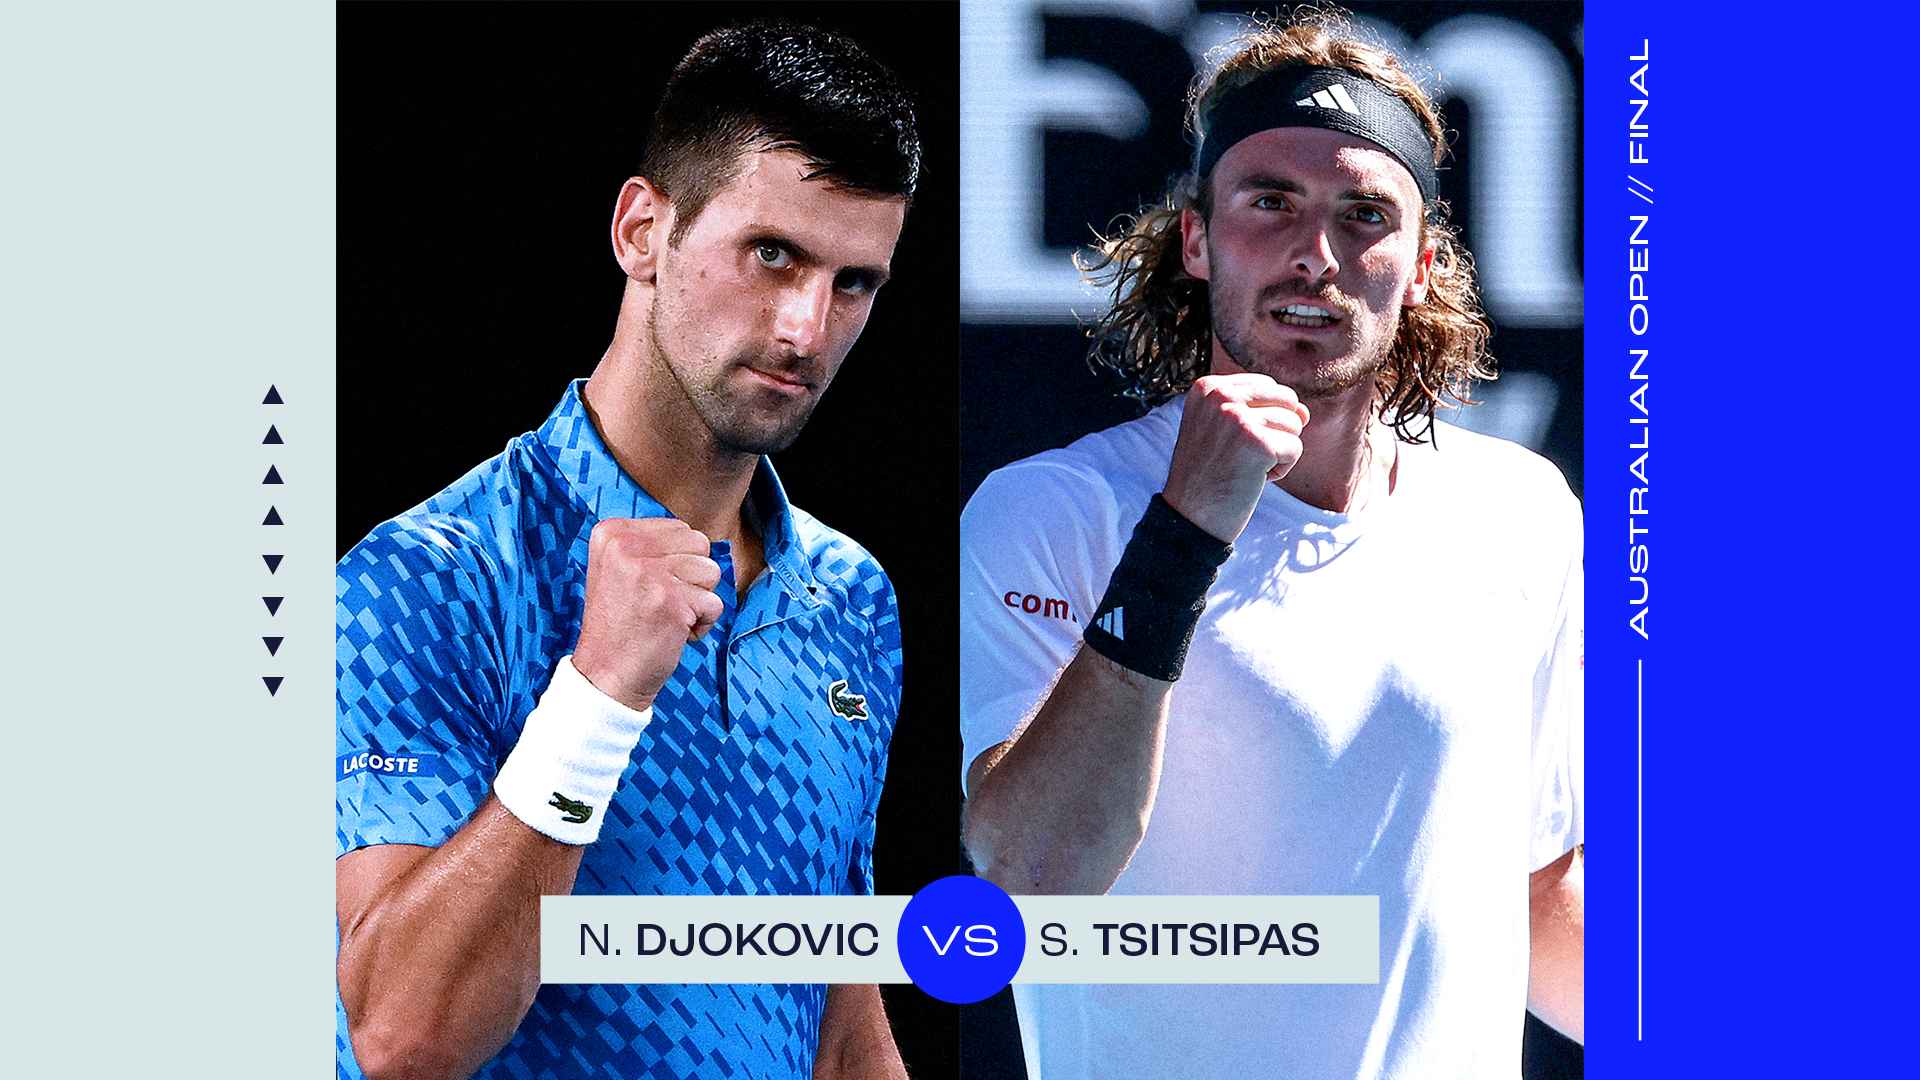 Preview Unbeaten Djokovic, Tsitsipas Battle For World No